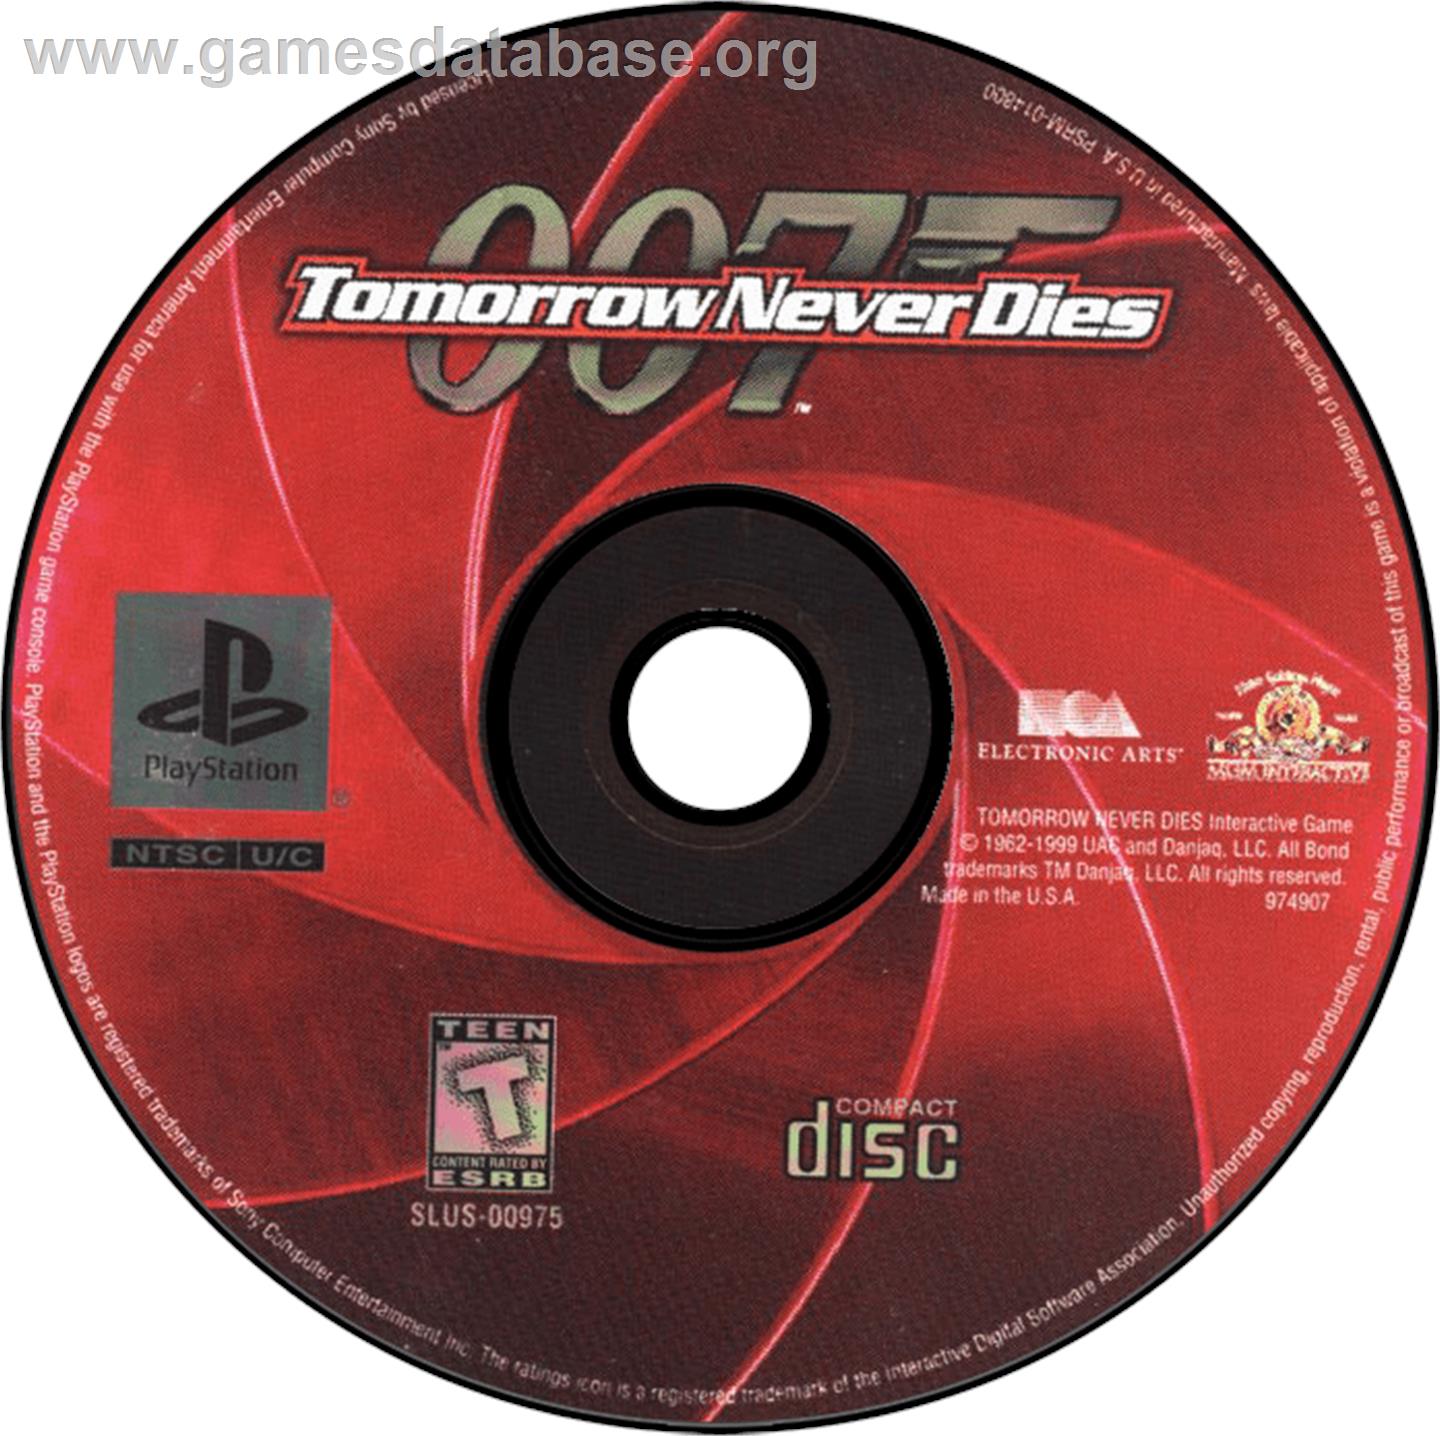 007: Tomorrow Never Dies - Sony Playstation - Artwork - Disc